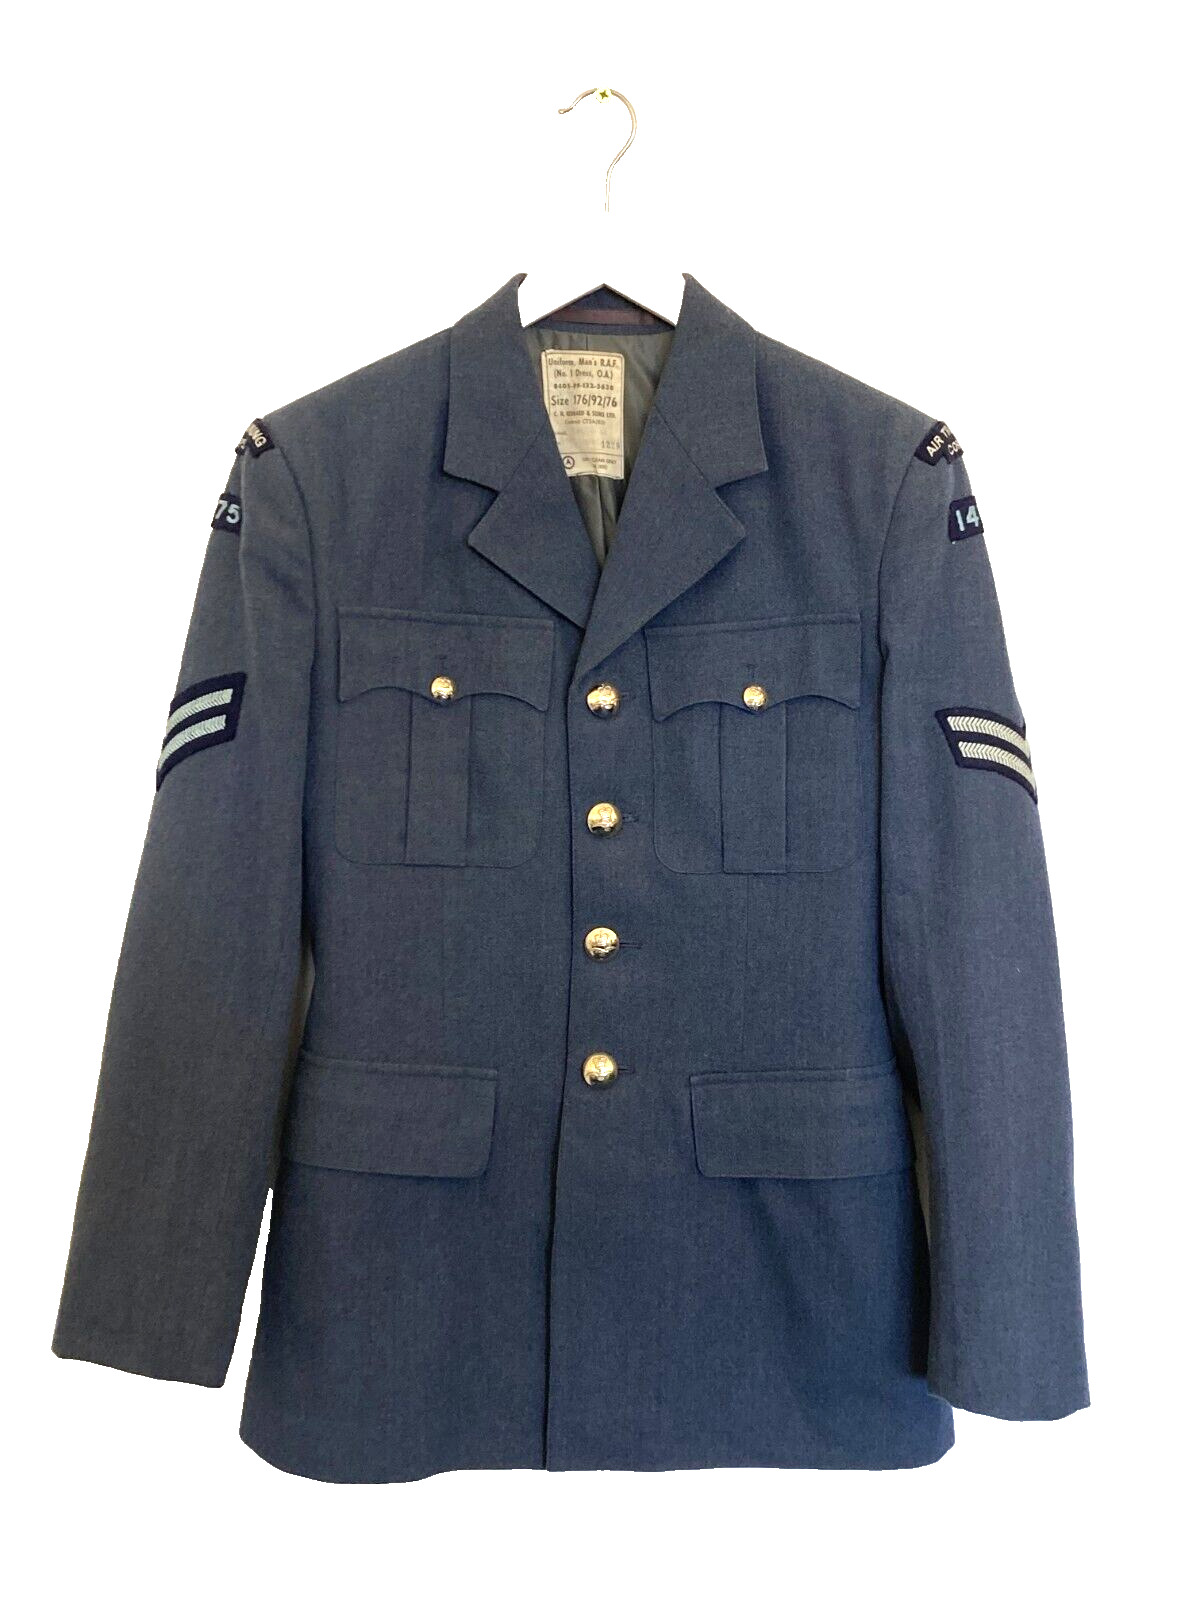 Vintage RAF Air Training Corporal Jacket, Measurements in Description